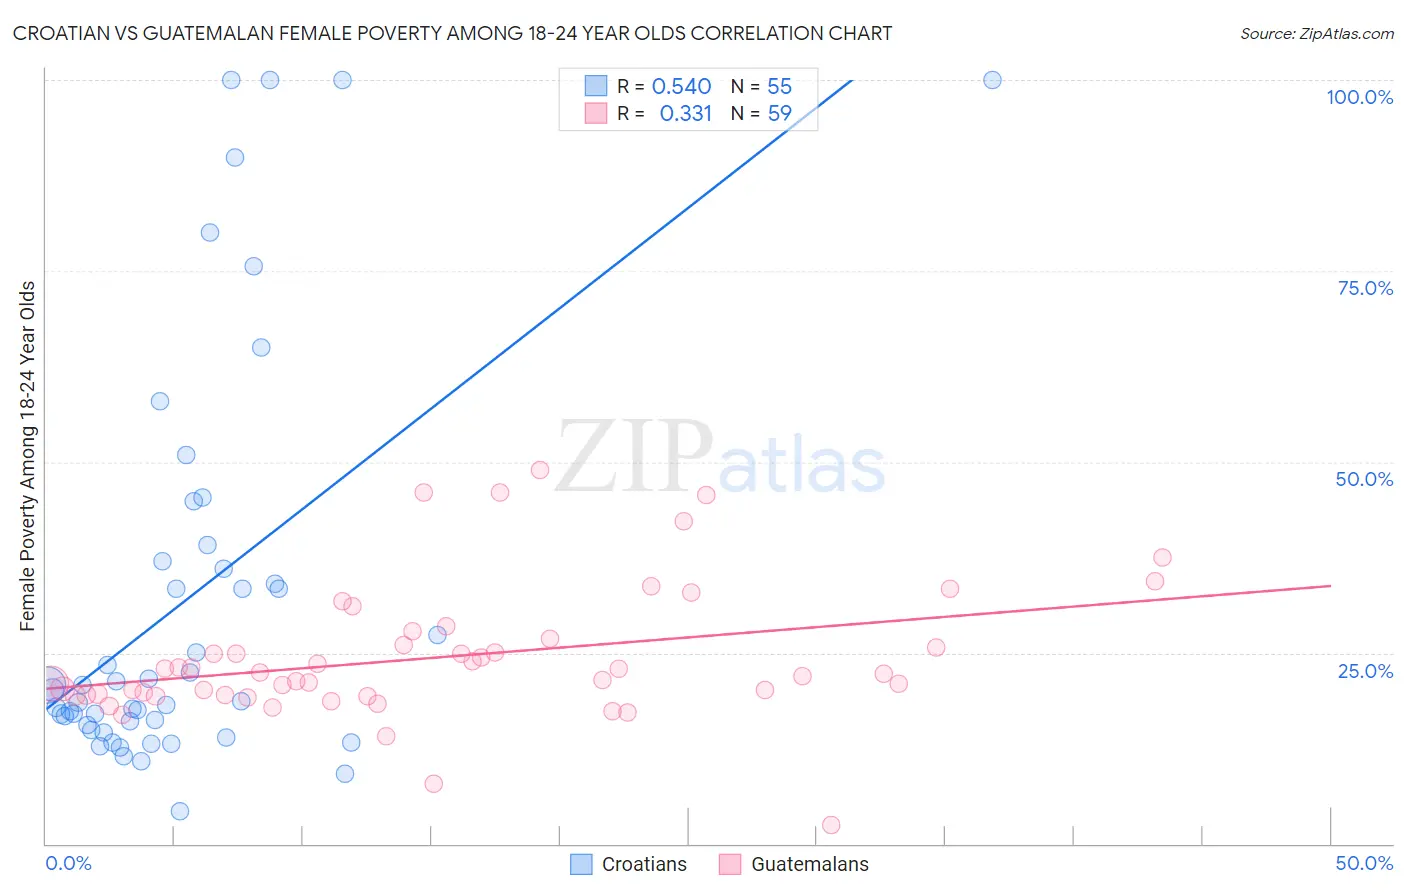 Croatian vs Guatemalan Female Poverty Among 18-24 Year Olds